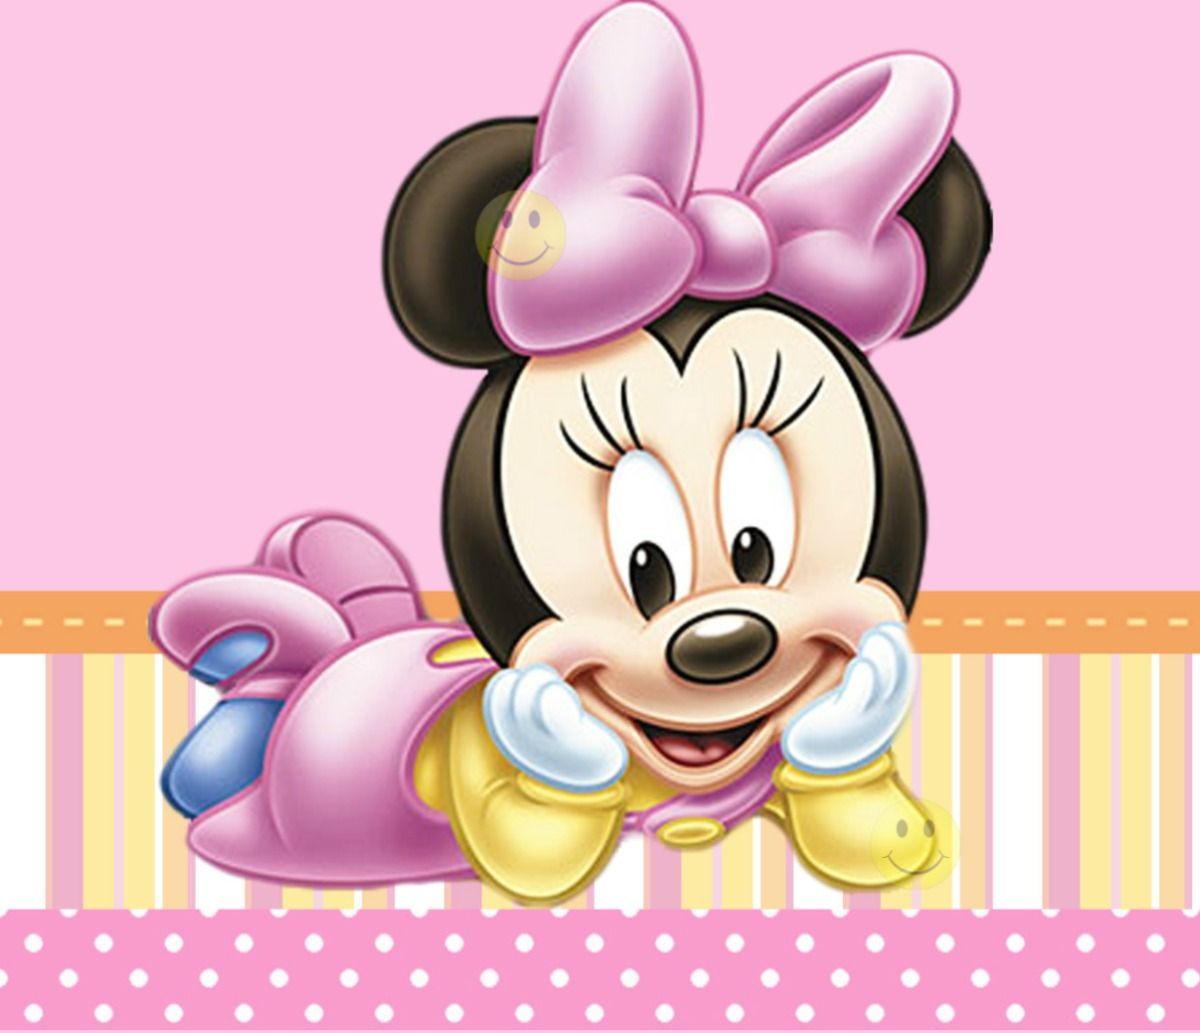 Minnie Mouse. Minnie mouse 1st birthday, Minnie mouse first birthday, Baby minnie